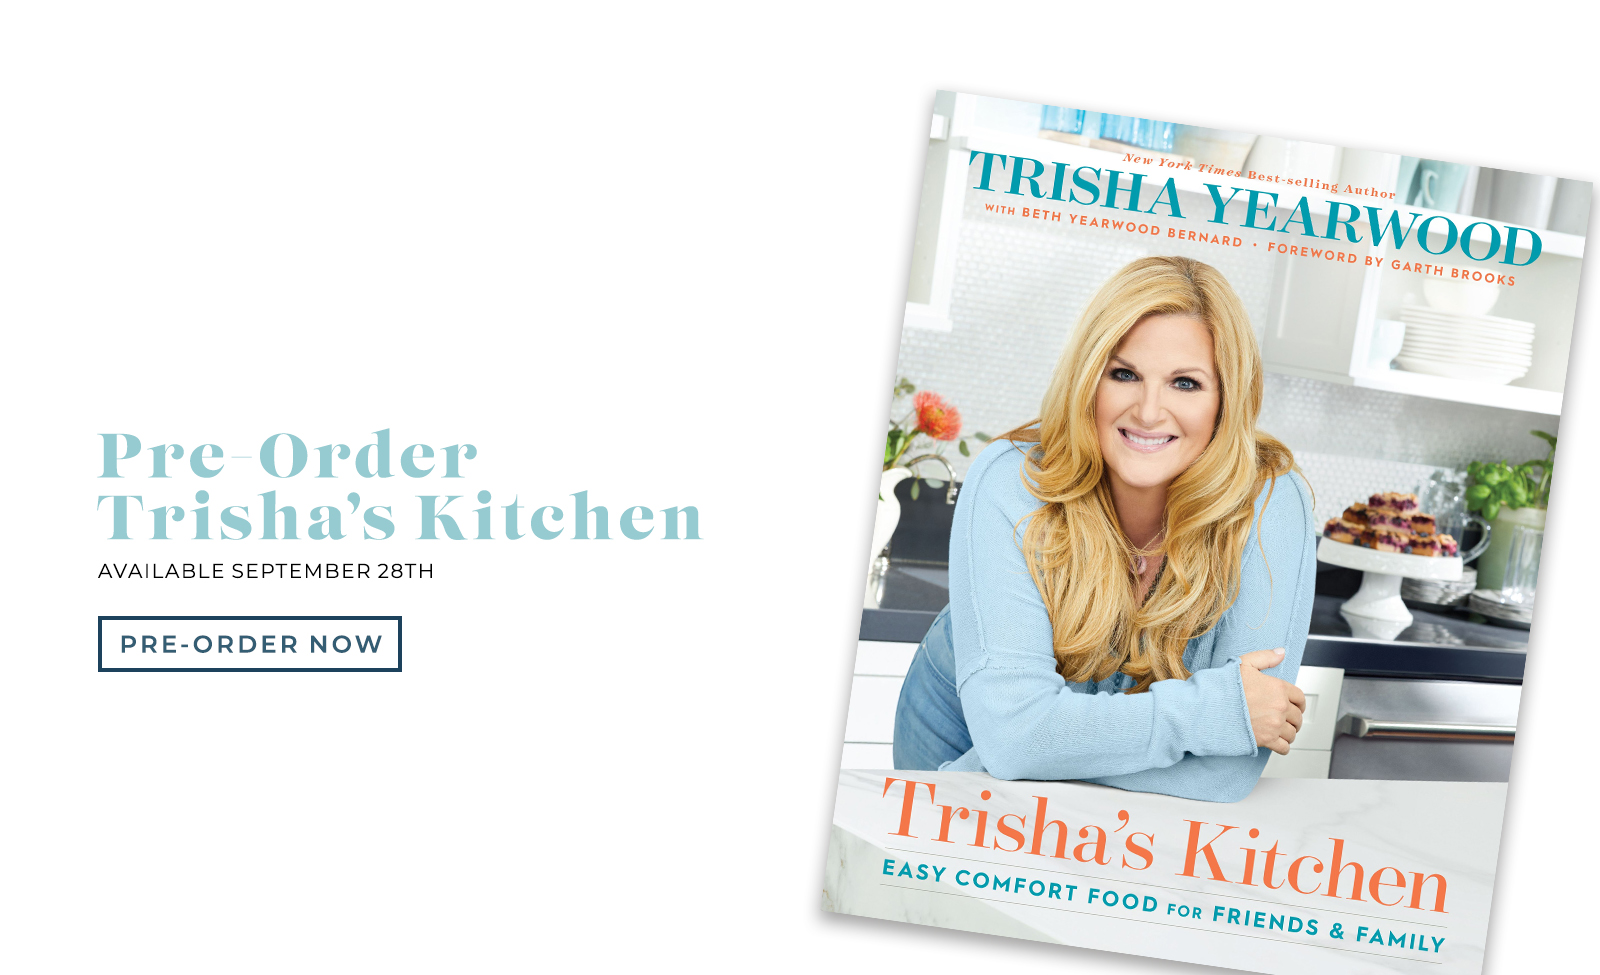 trisha yearwood offer cookware｜TikTok Search